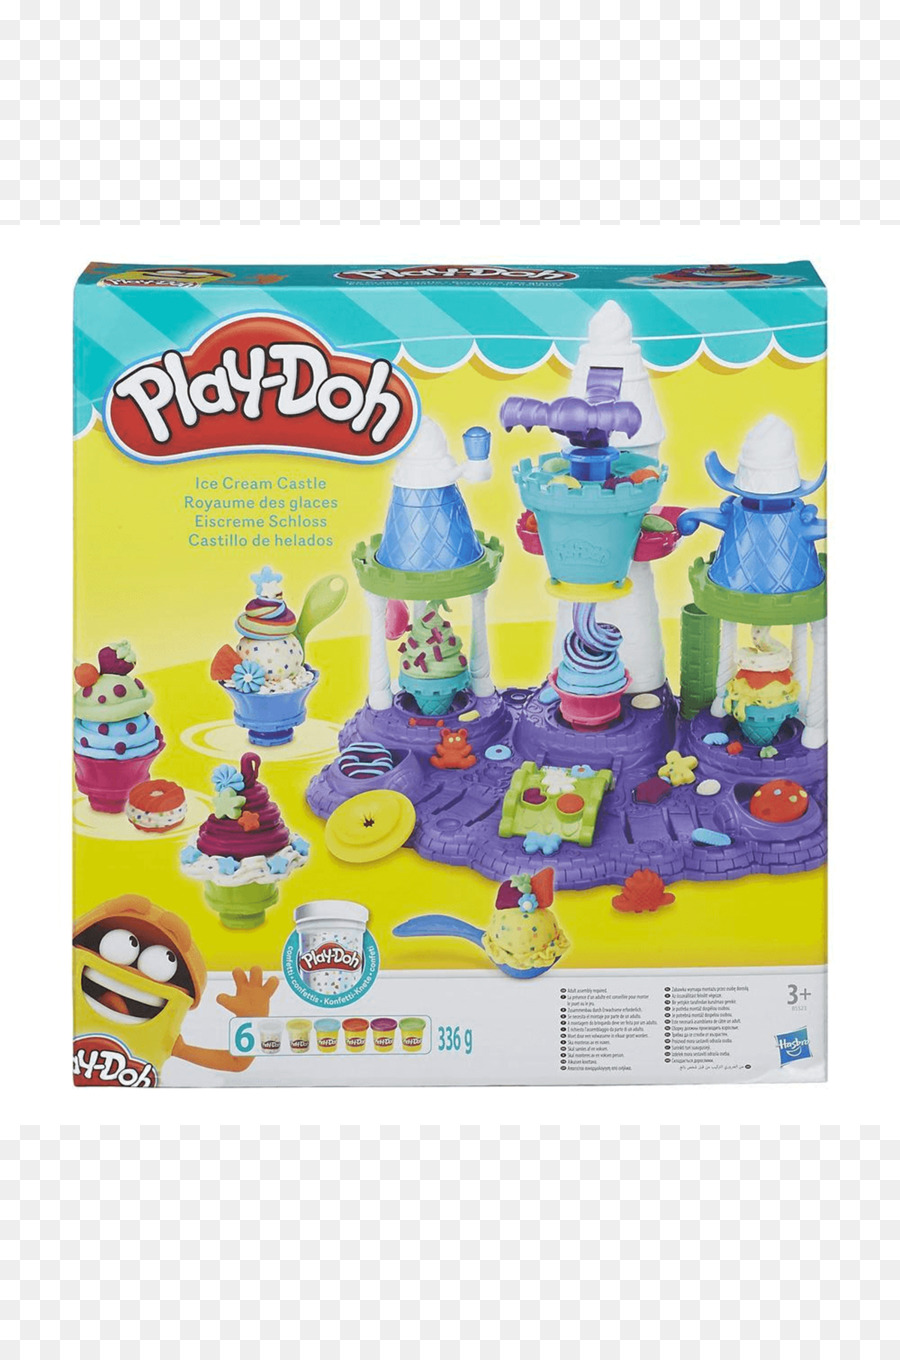 Play-Doh Amazon.com Eis Hamleys Toy - Eis